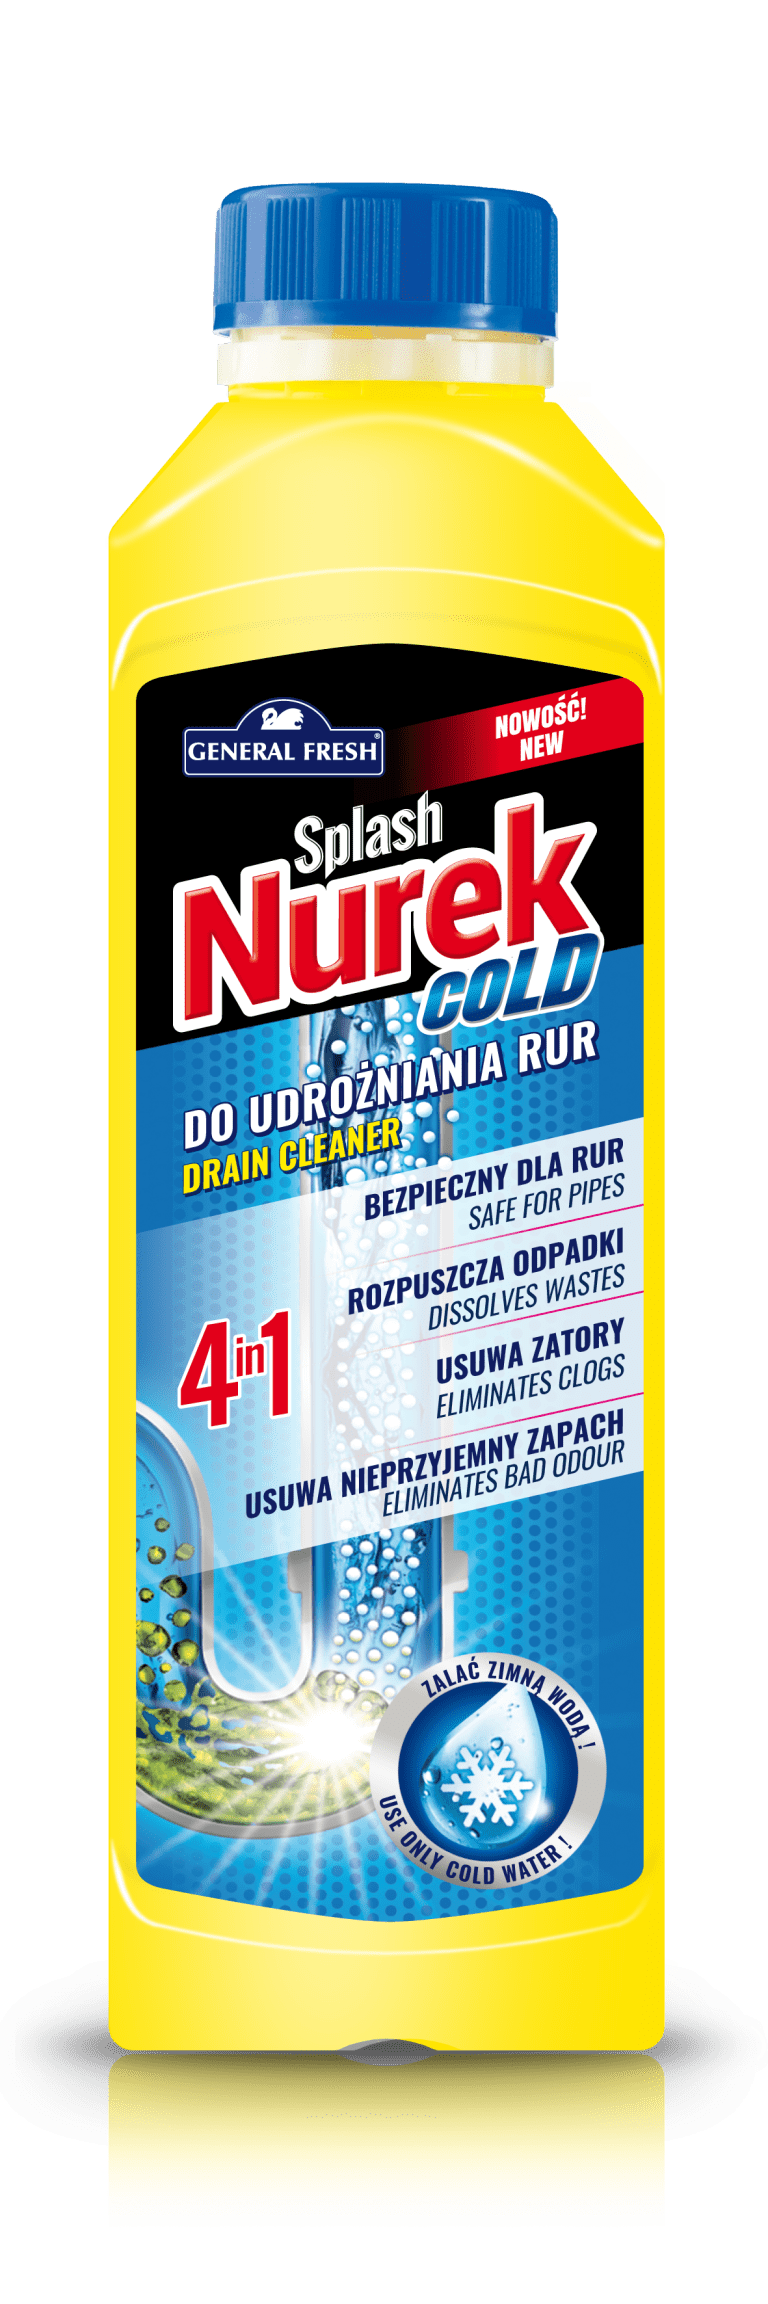 splash-nurek-cold_7252.png